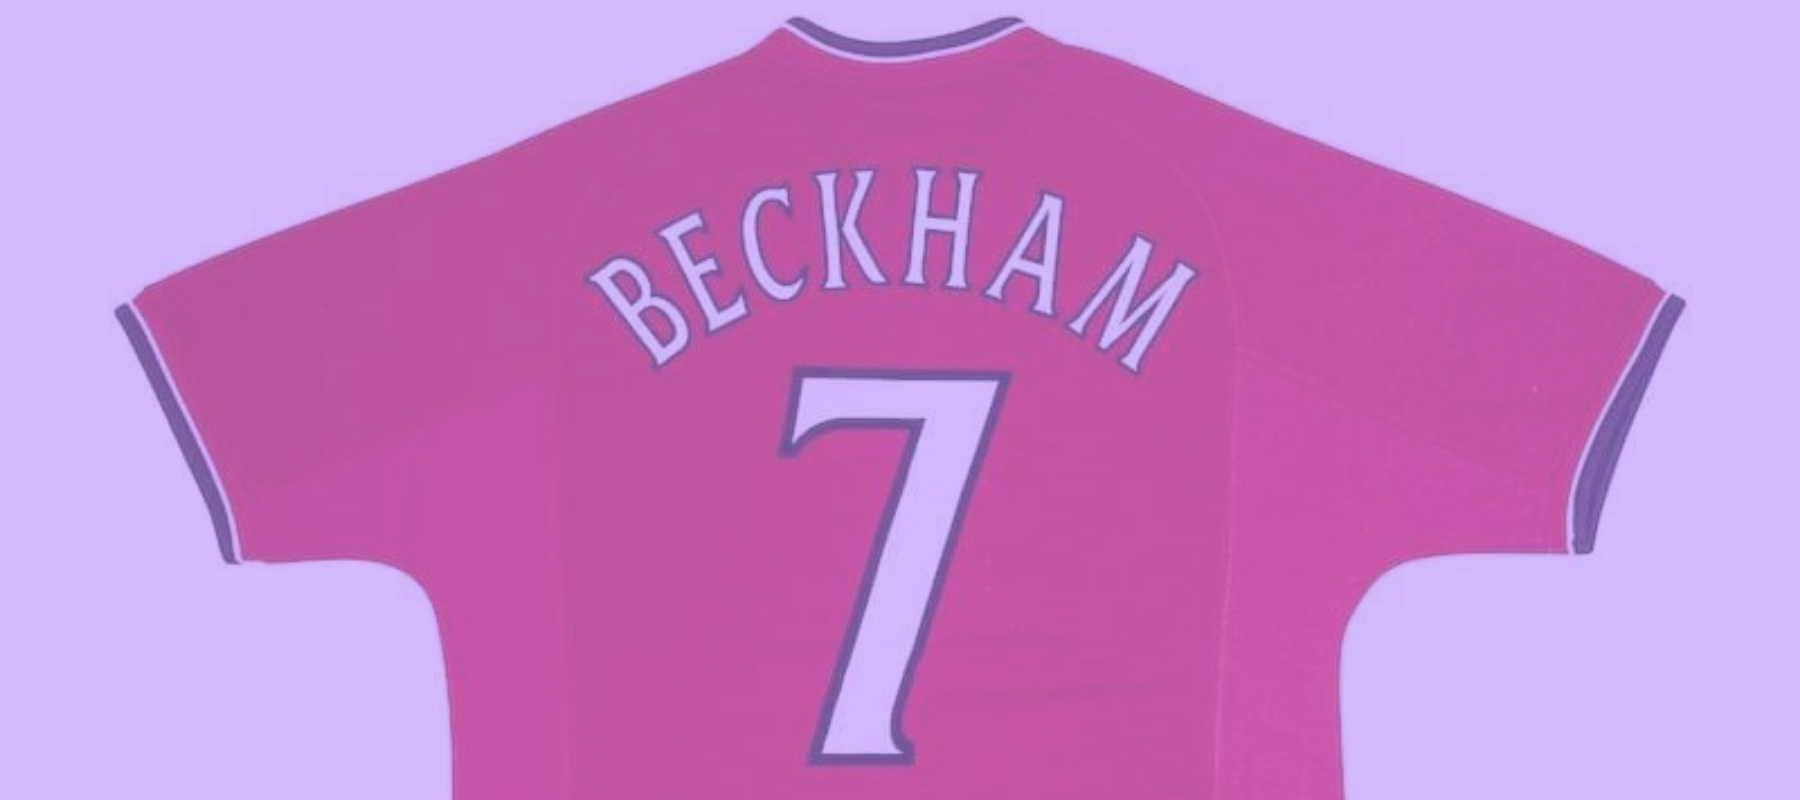 David Beckham: Career in Football Boots